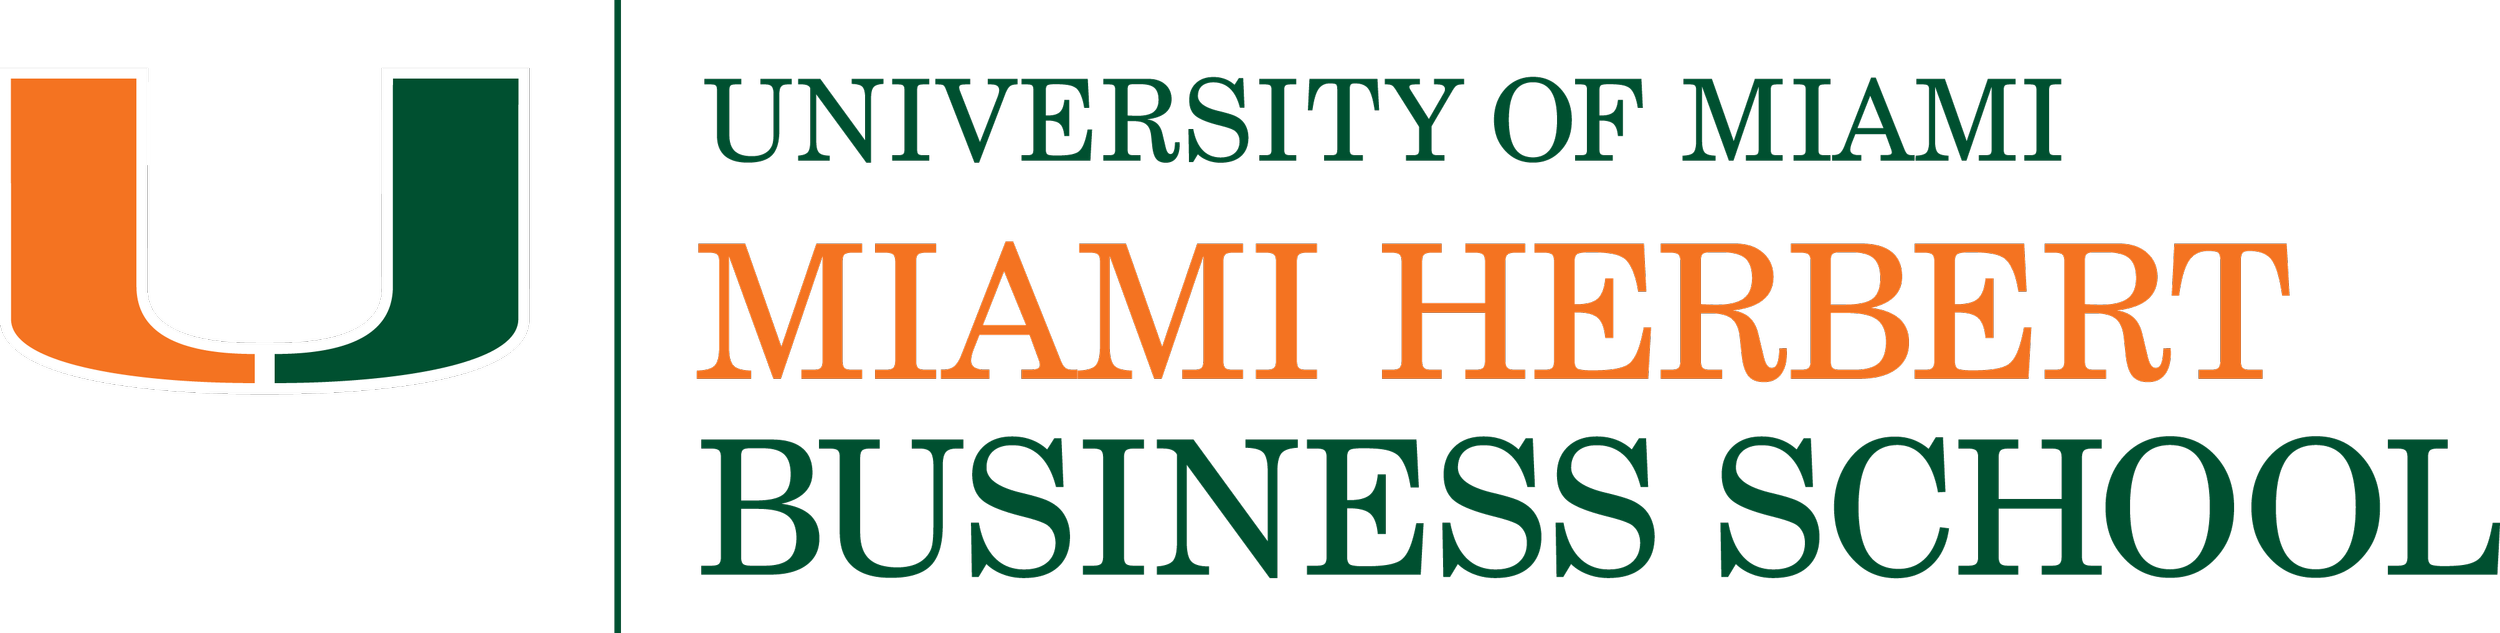 University-of-miami-patti-and-allan-herbert-business-school-logo-4.png